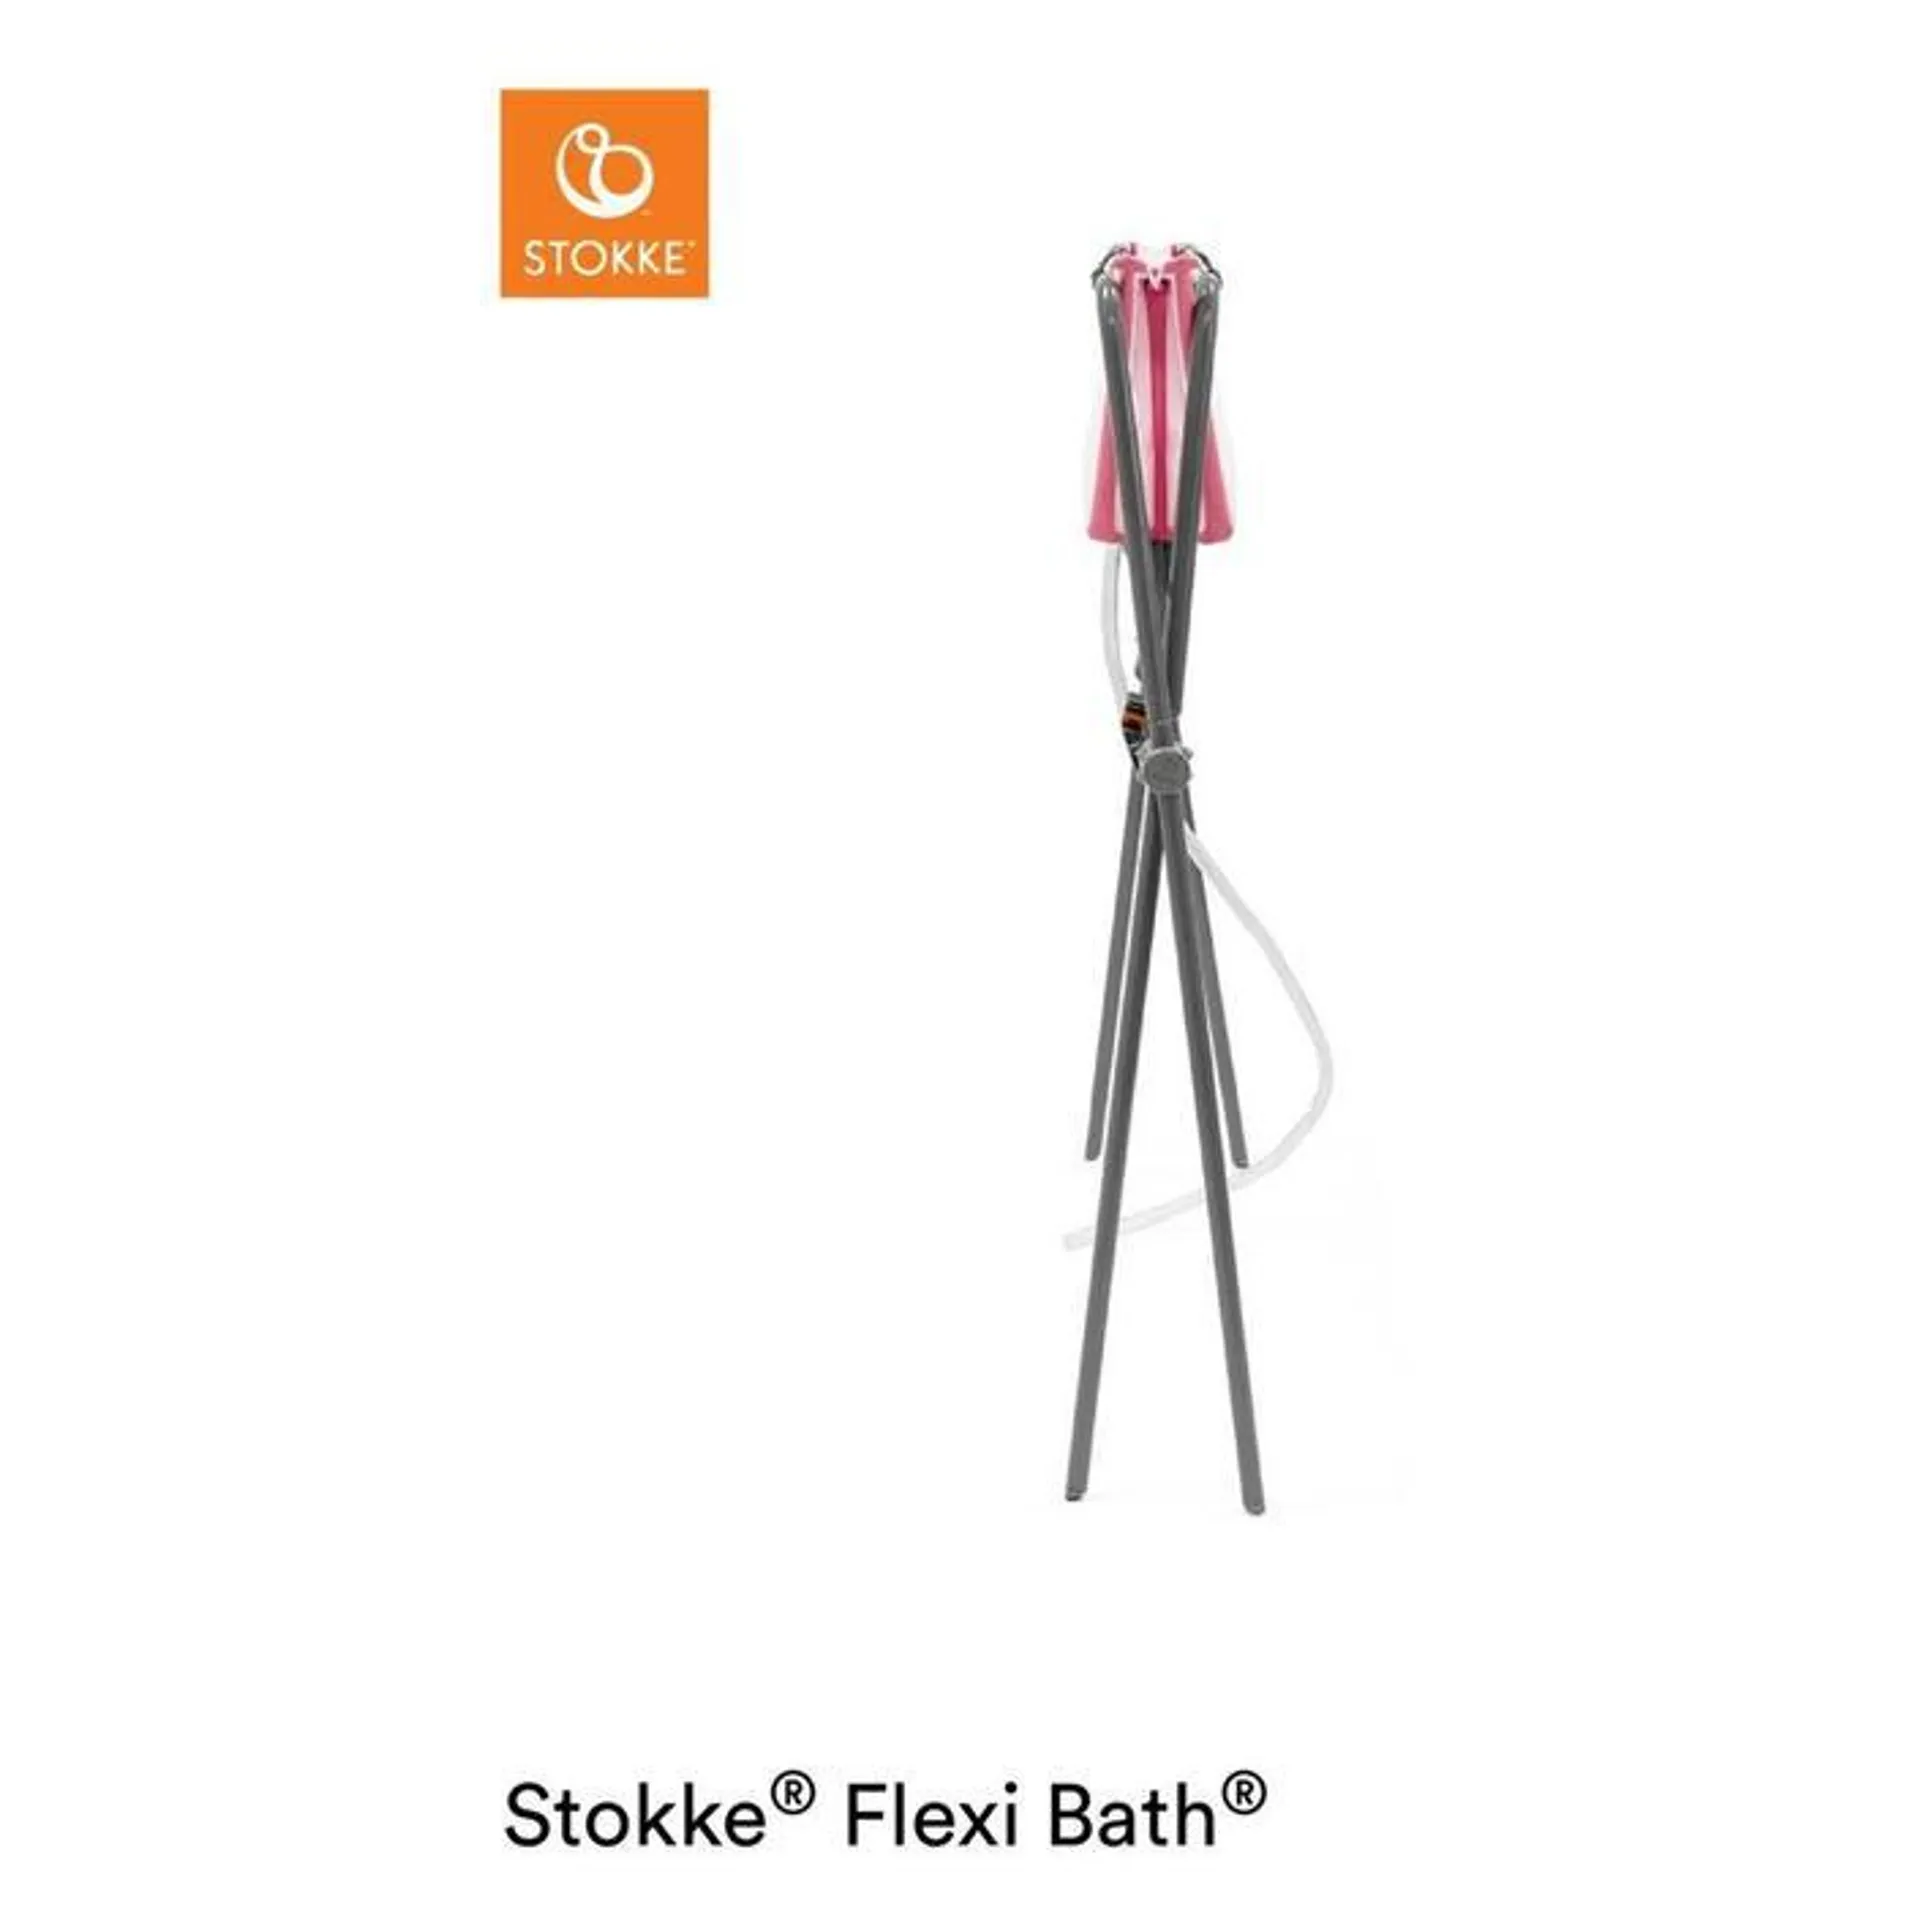 STOKKE stalak Flexi bath grey